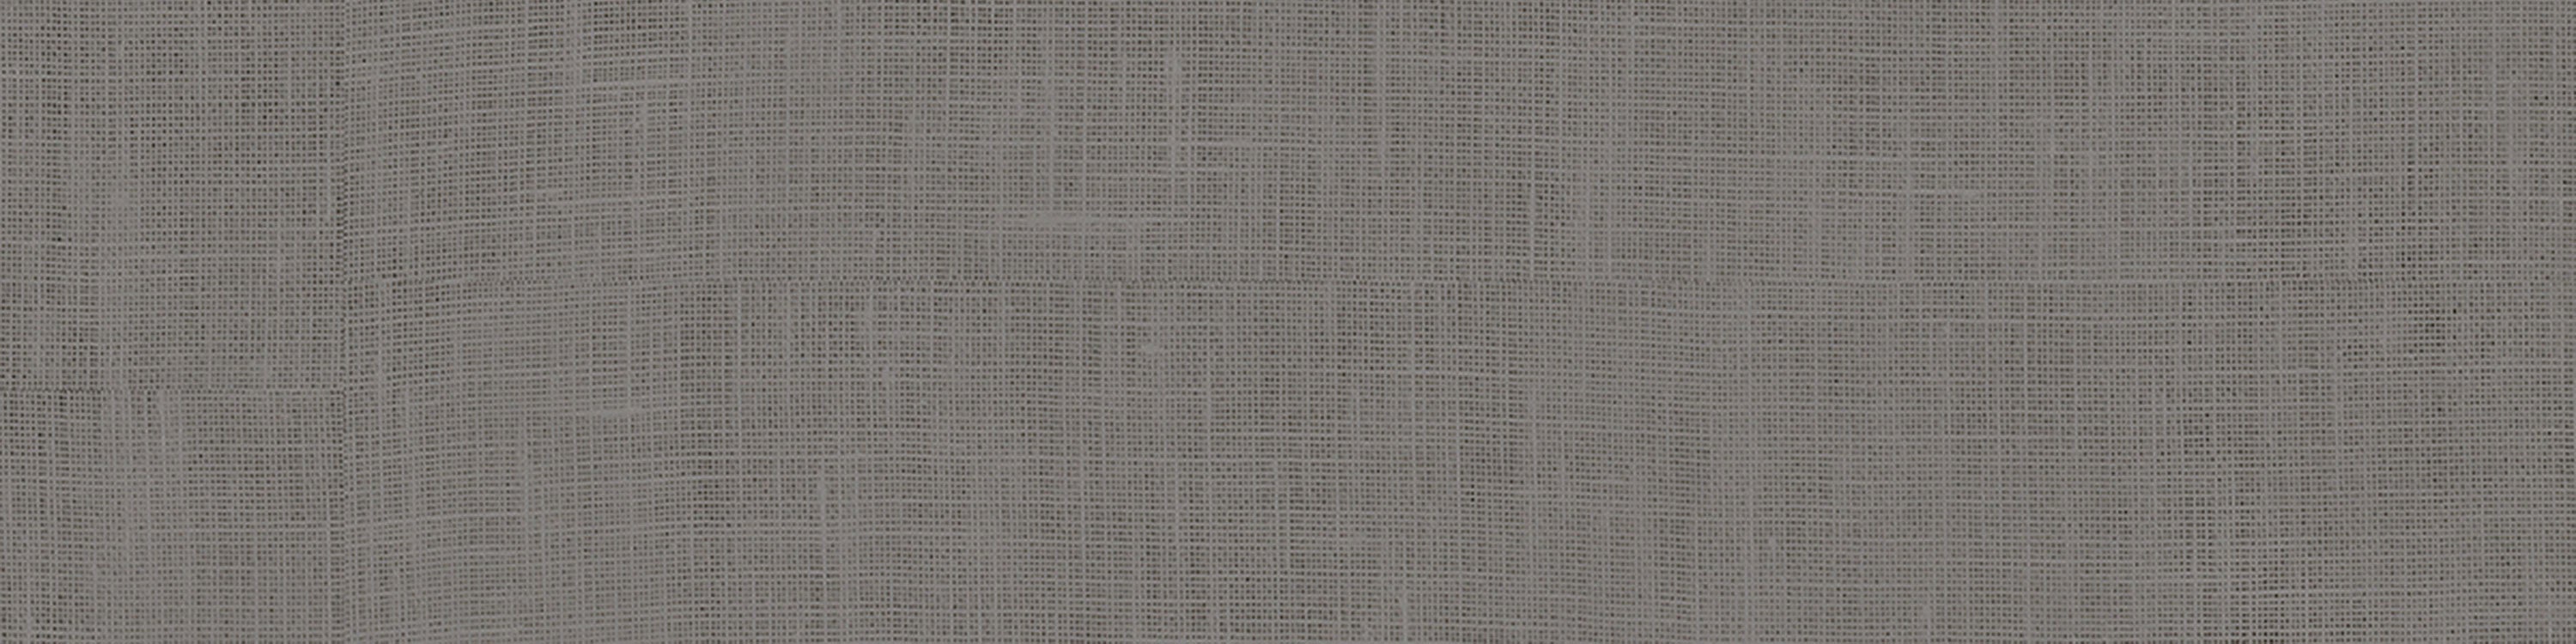 landmark 9mm soul dw grey merino field tile 6x24x9mm matte rectified porcelain tile distributed by surface group international